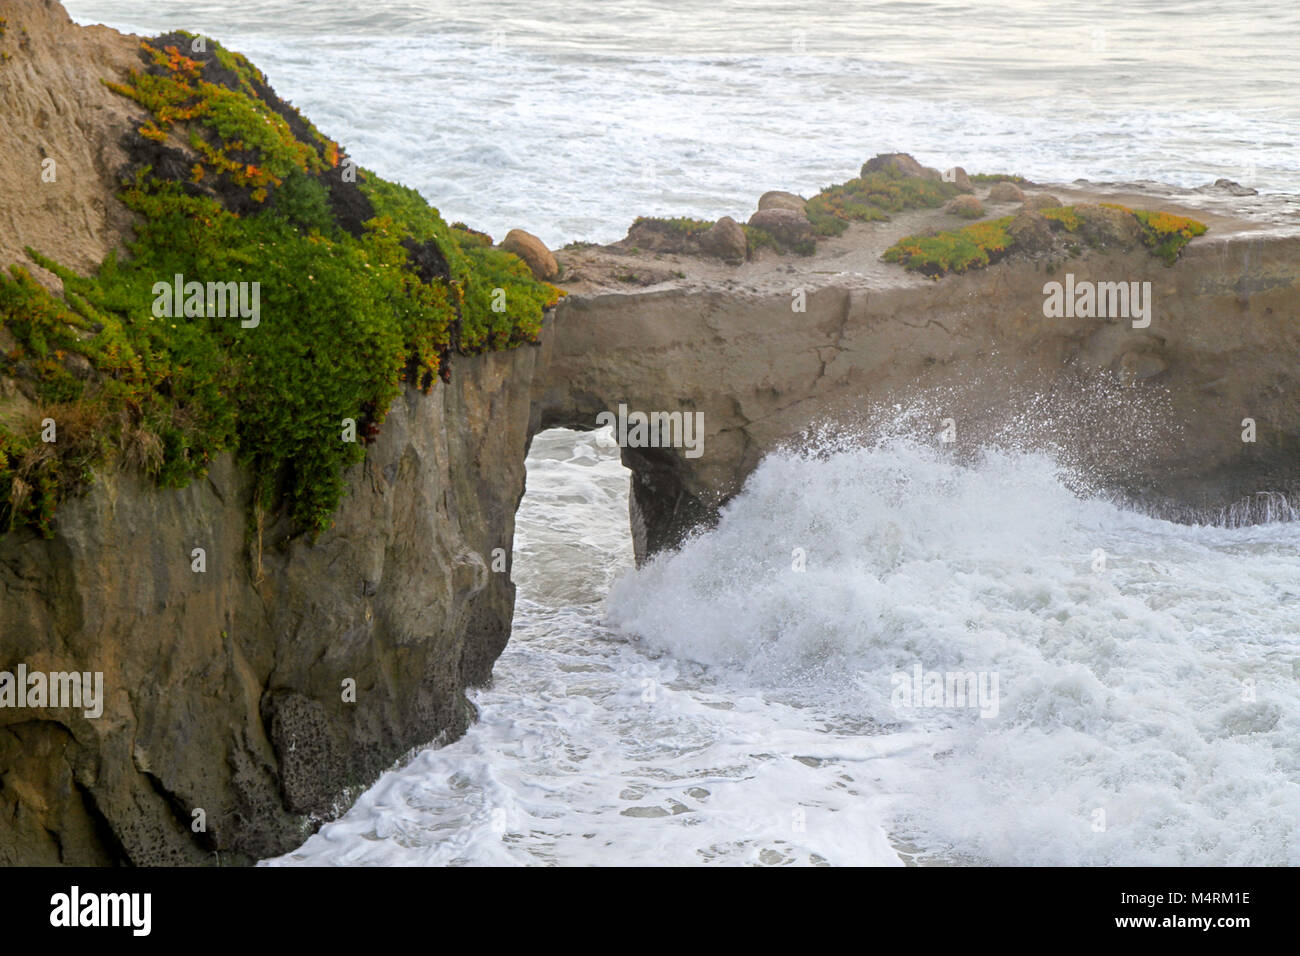 Waves break against cliffs, Santa Cruz, California, United States Stock Photo